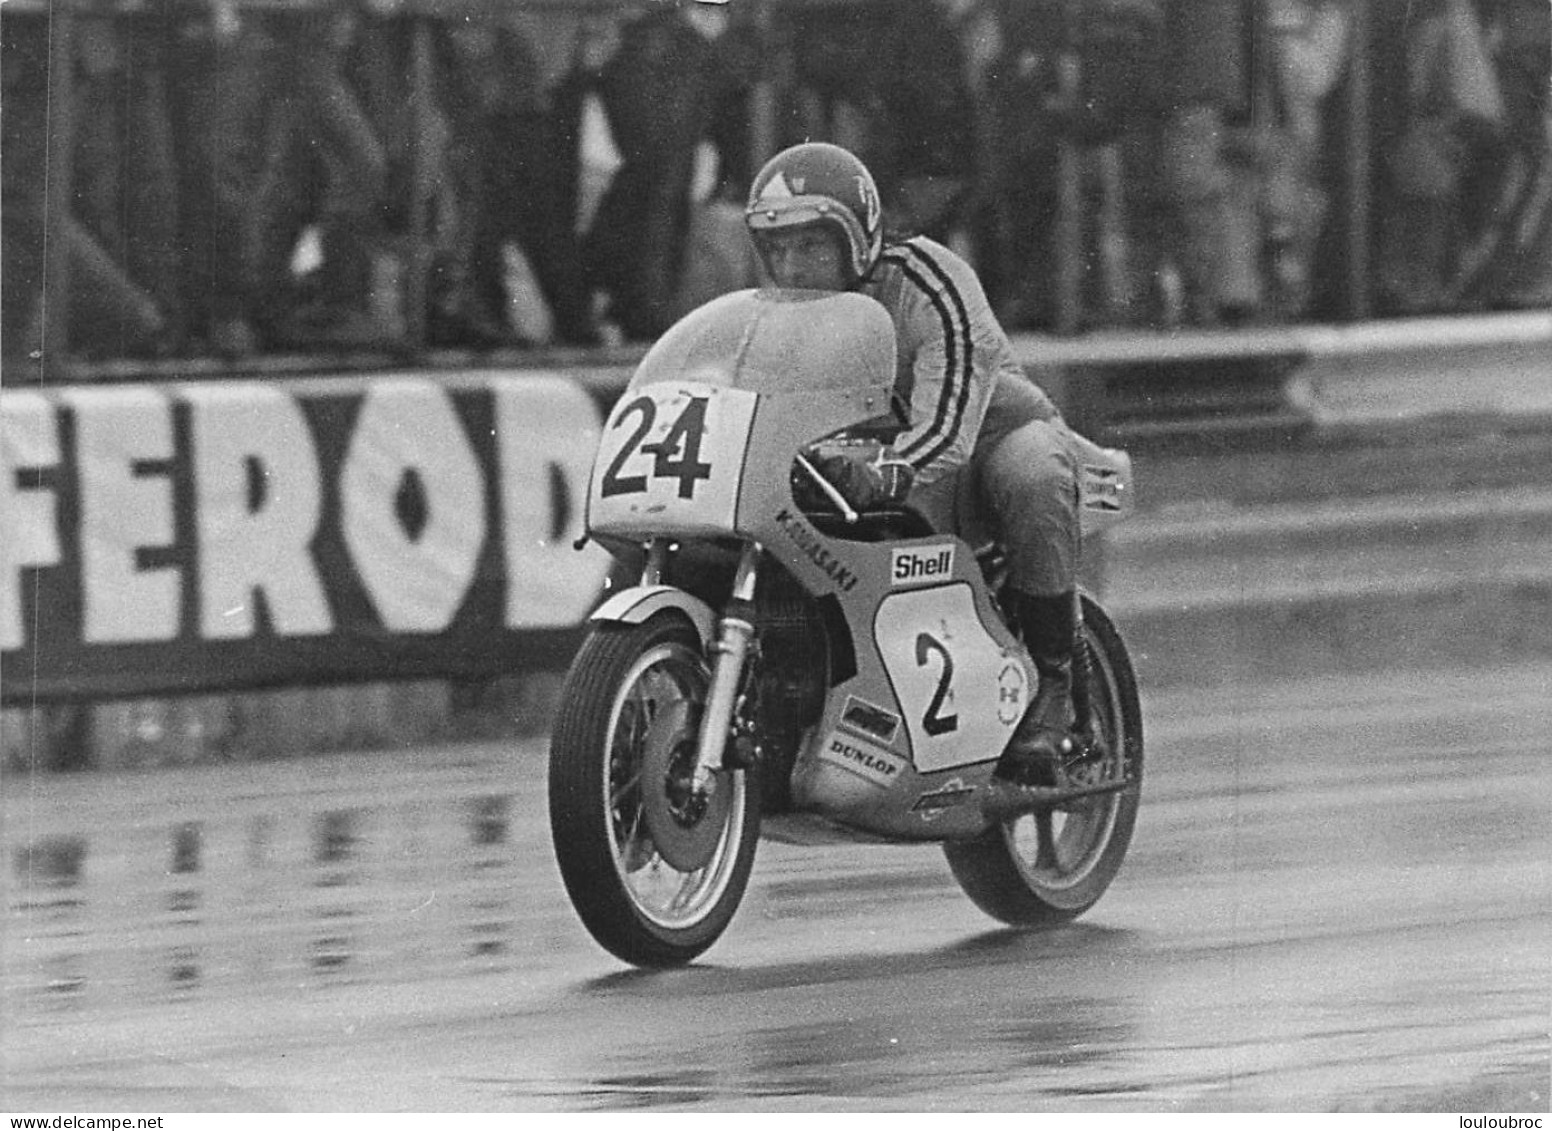 PILOTE  MOTO PERCY TAIT  COURSE ANNEE 1974 KAWASAKI 500CC  RACE OF THE YEAR PHOTO DE PRESSE ORIGINALE 18X13CM R1 - Sport